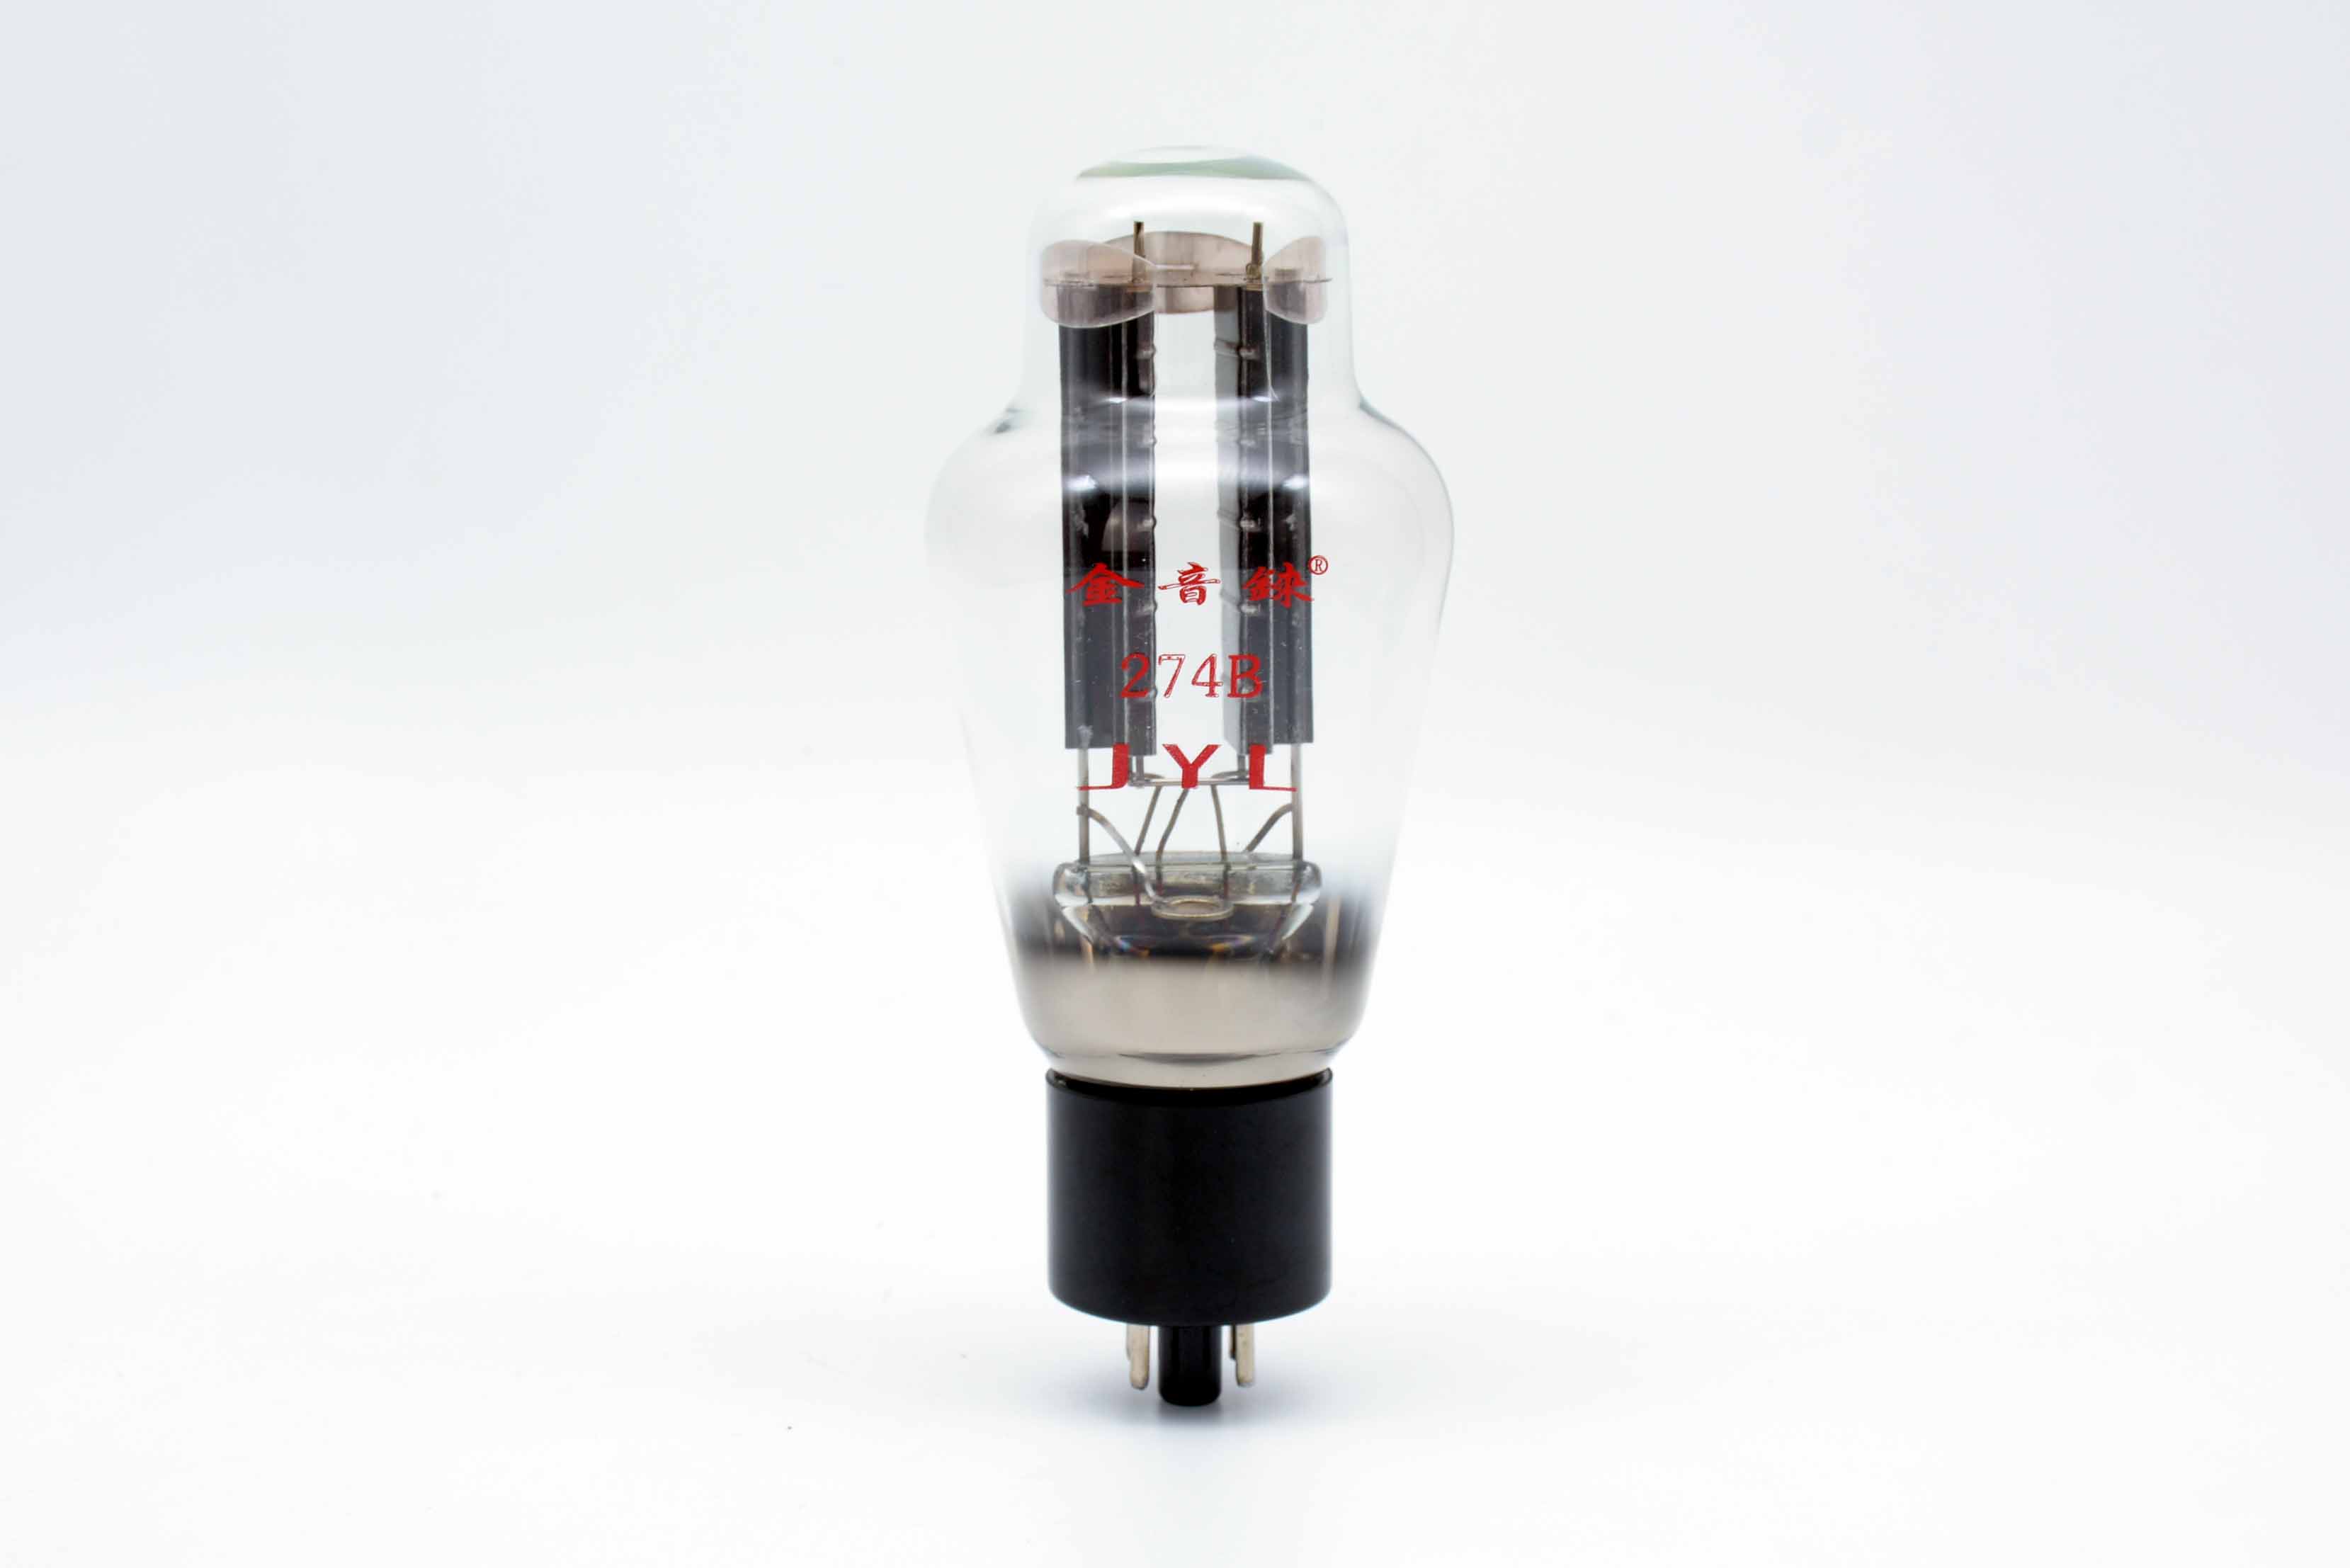 JYL HiFi 274B directly heated rectifier Tube